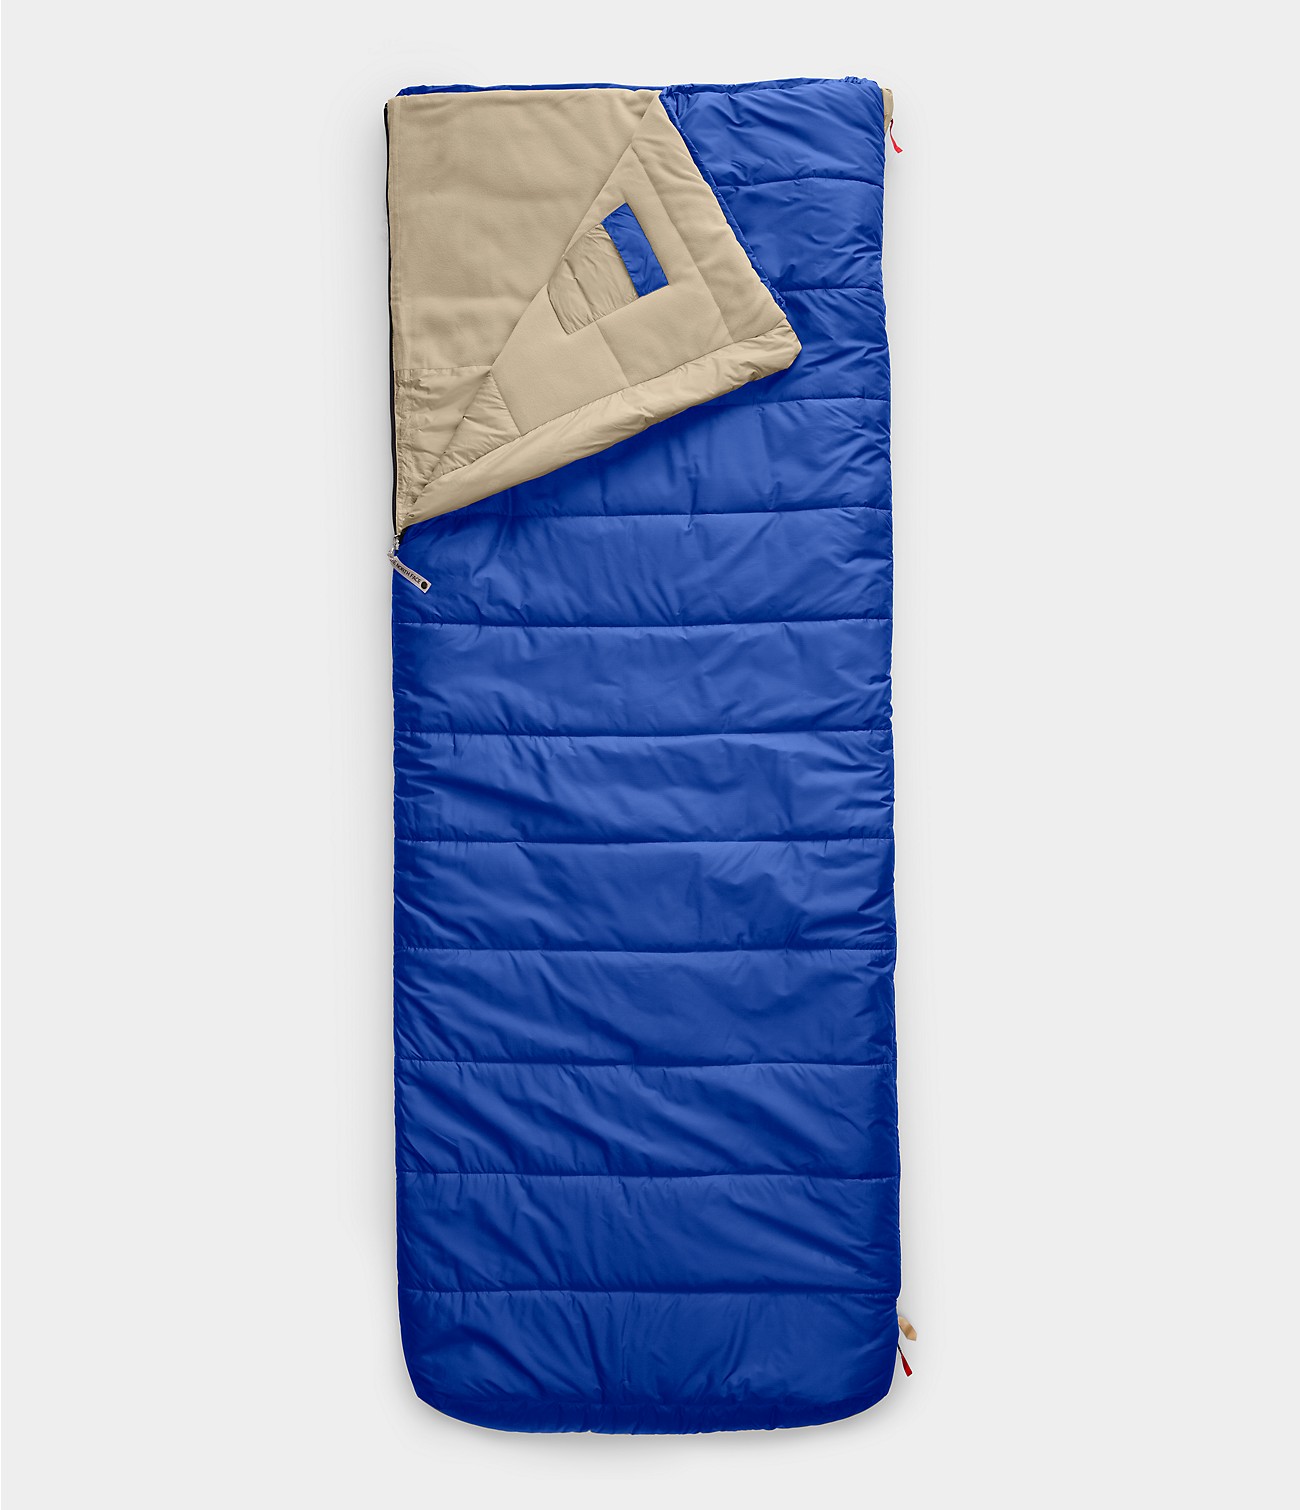 Eco Trail Bed—20 Sleeping Bag